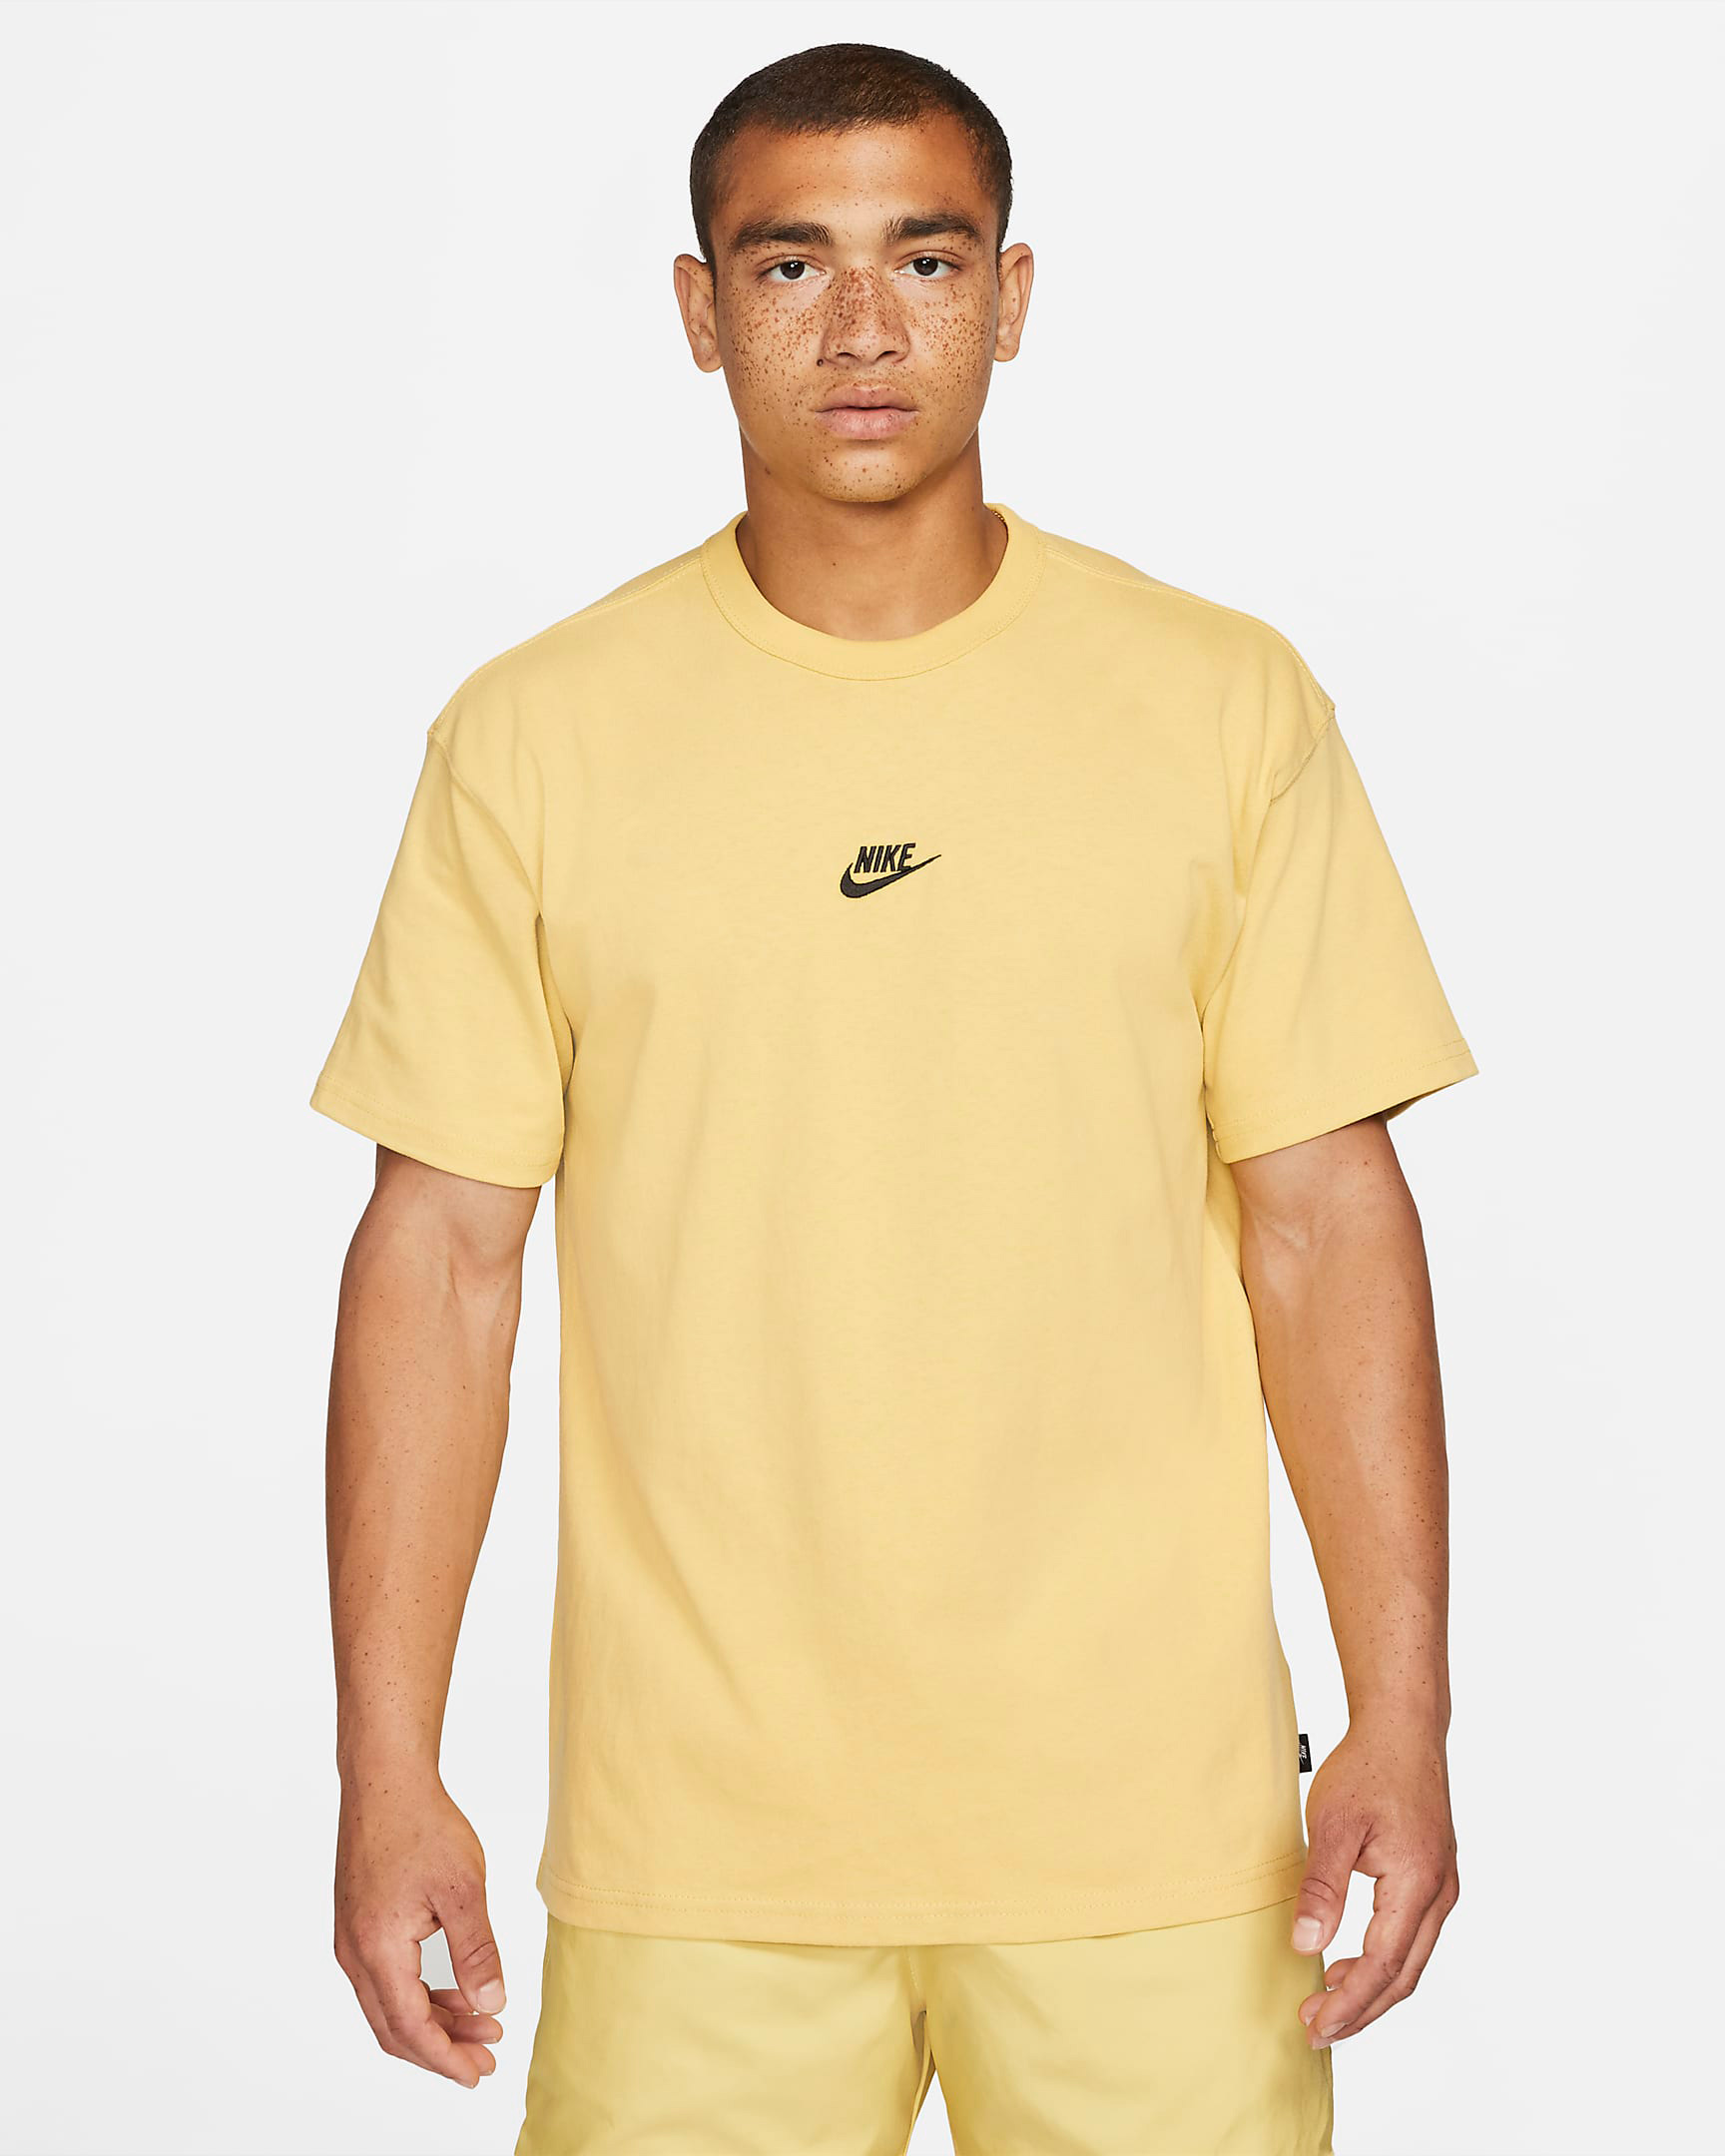 nike-saturn-gold-premium-essential-t-shirt